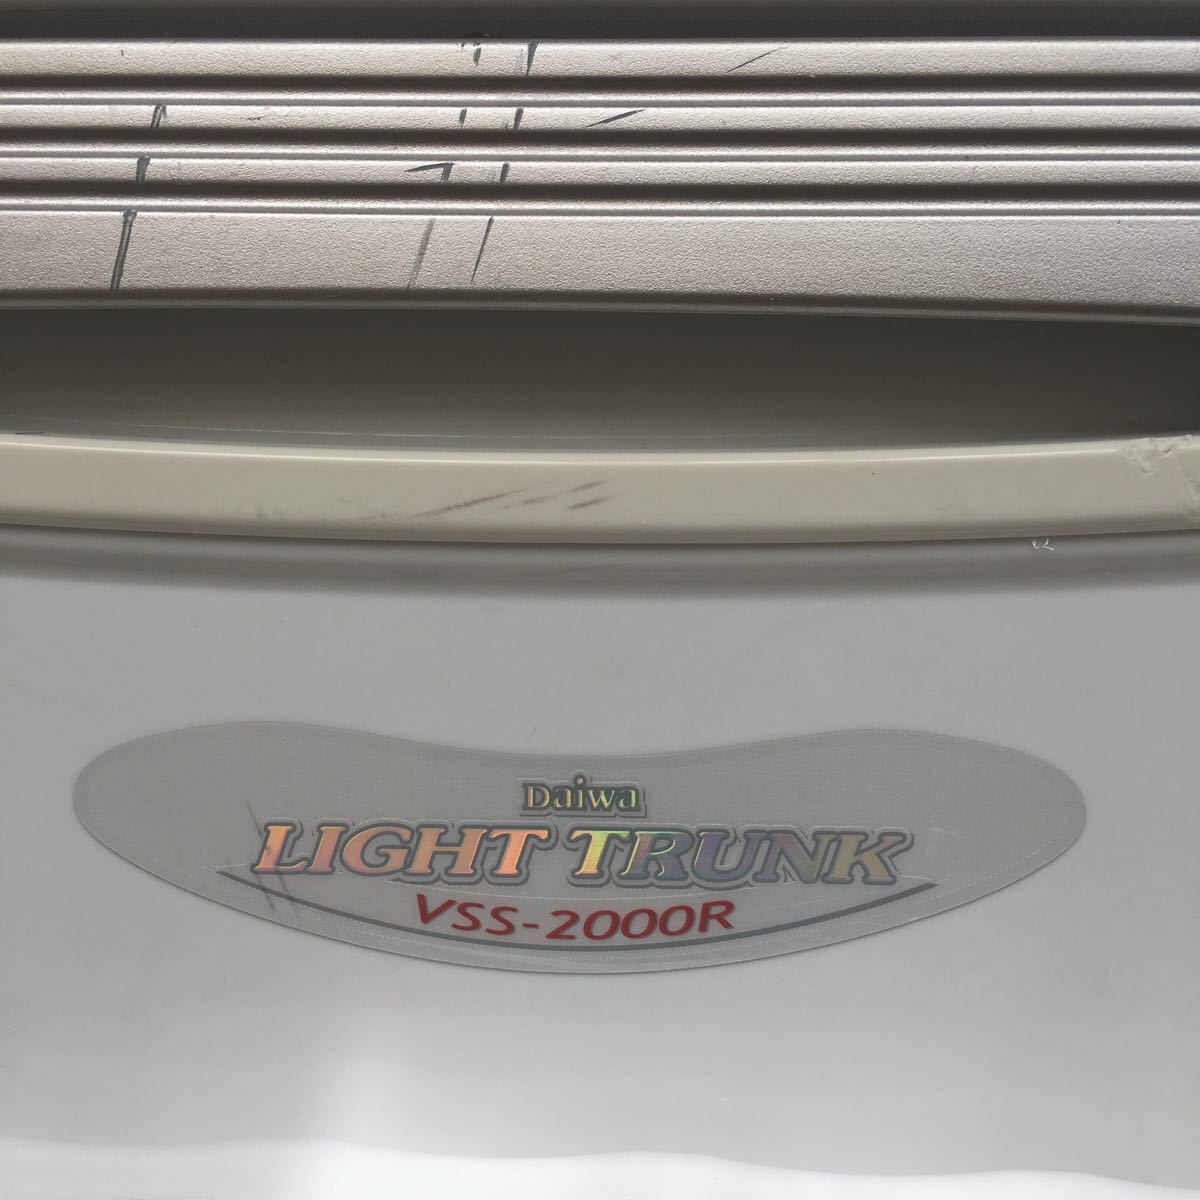 daiwa 燈手提箱 VSS2000R 6表面真空面板冷氣設備 原文:ダイワ ライトトランク VSS2000R 6面真空パネル クーラー